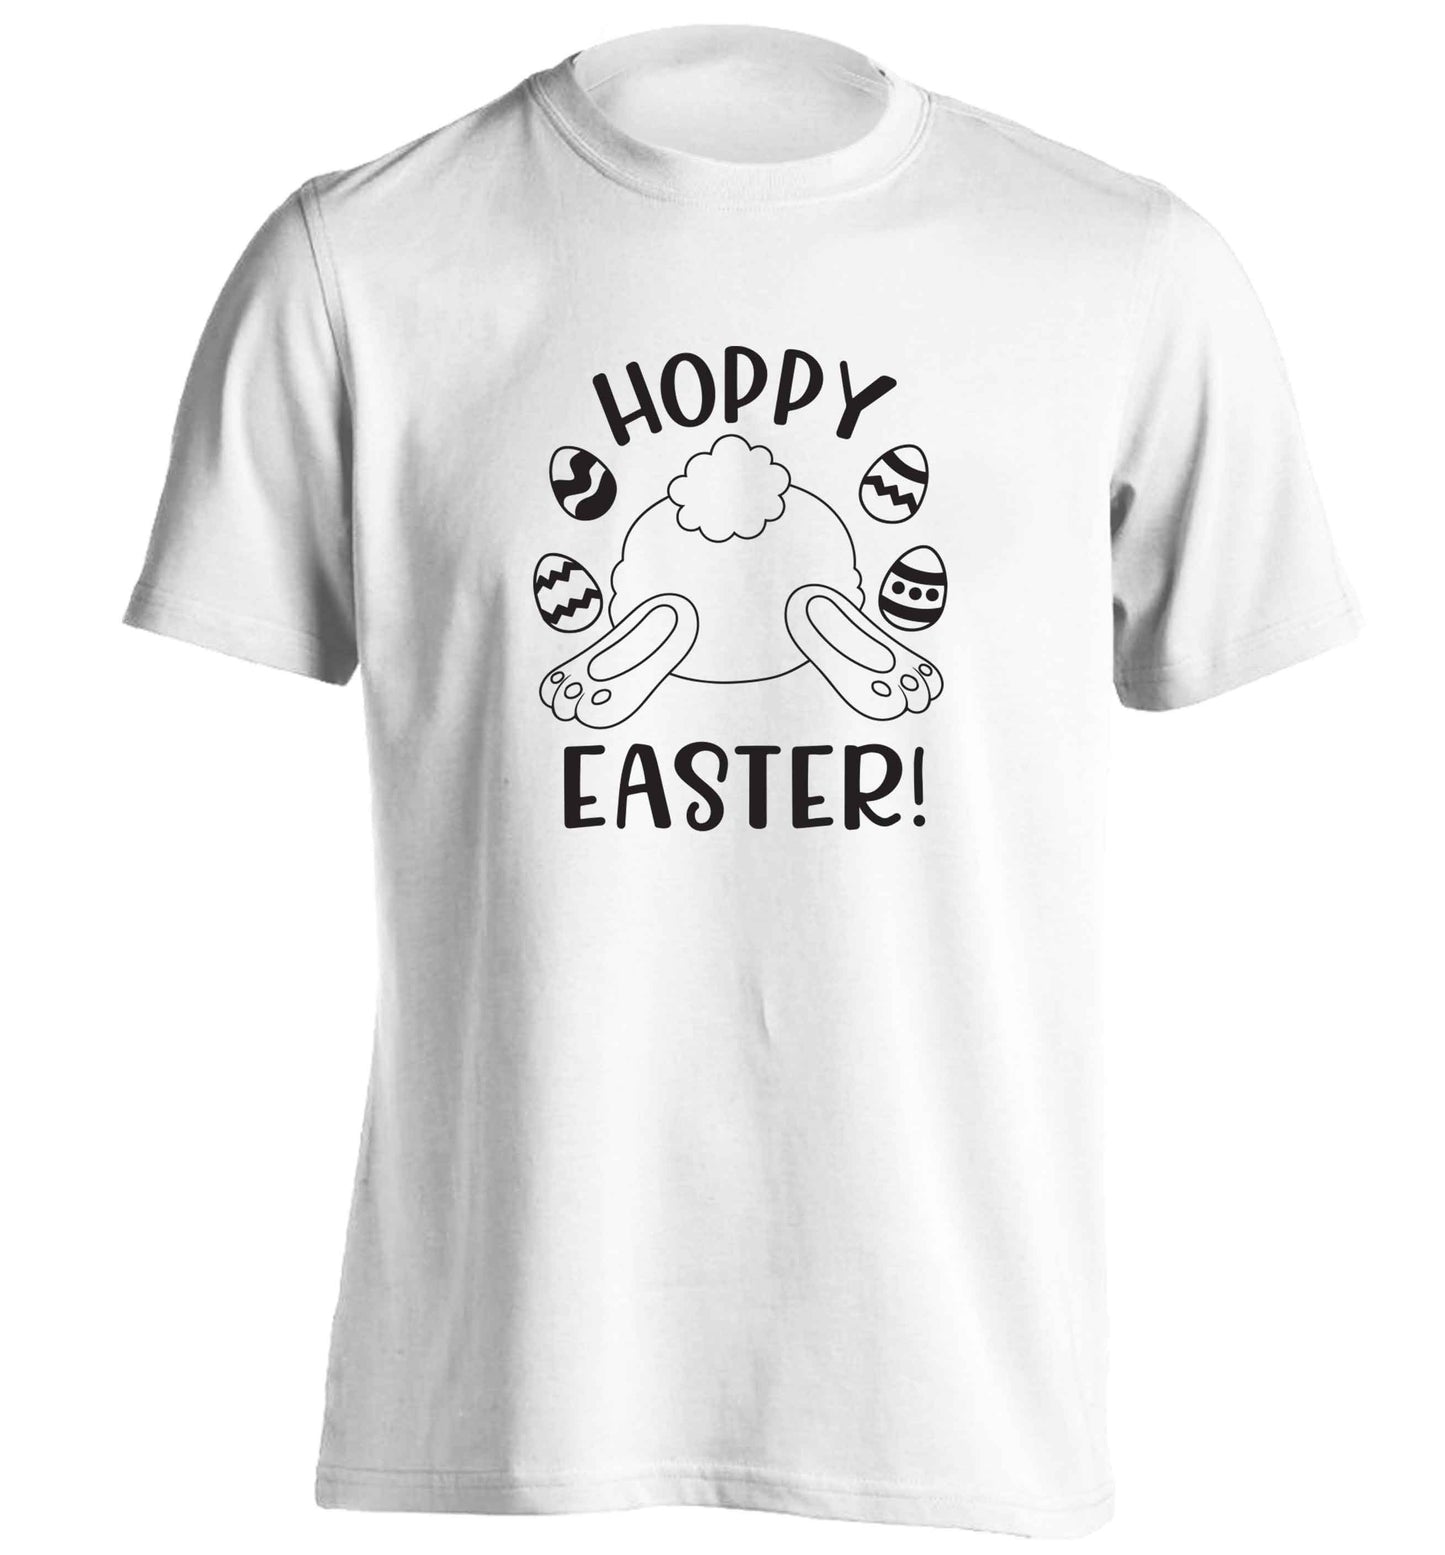 Hoppy Easter adults unisex white Tshirt 2XL